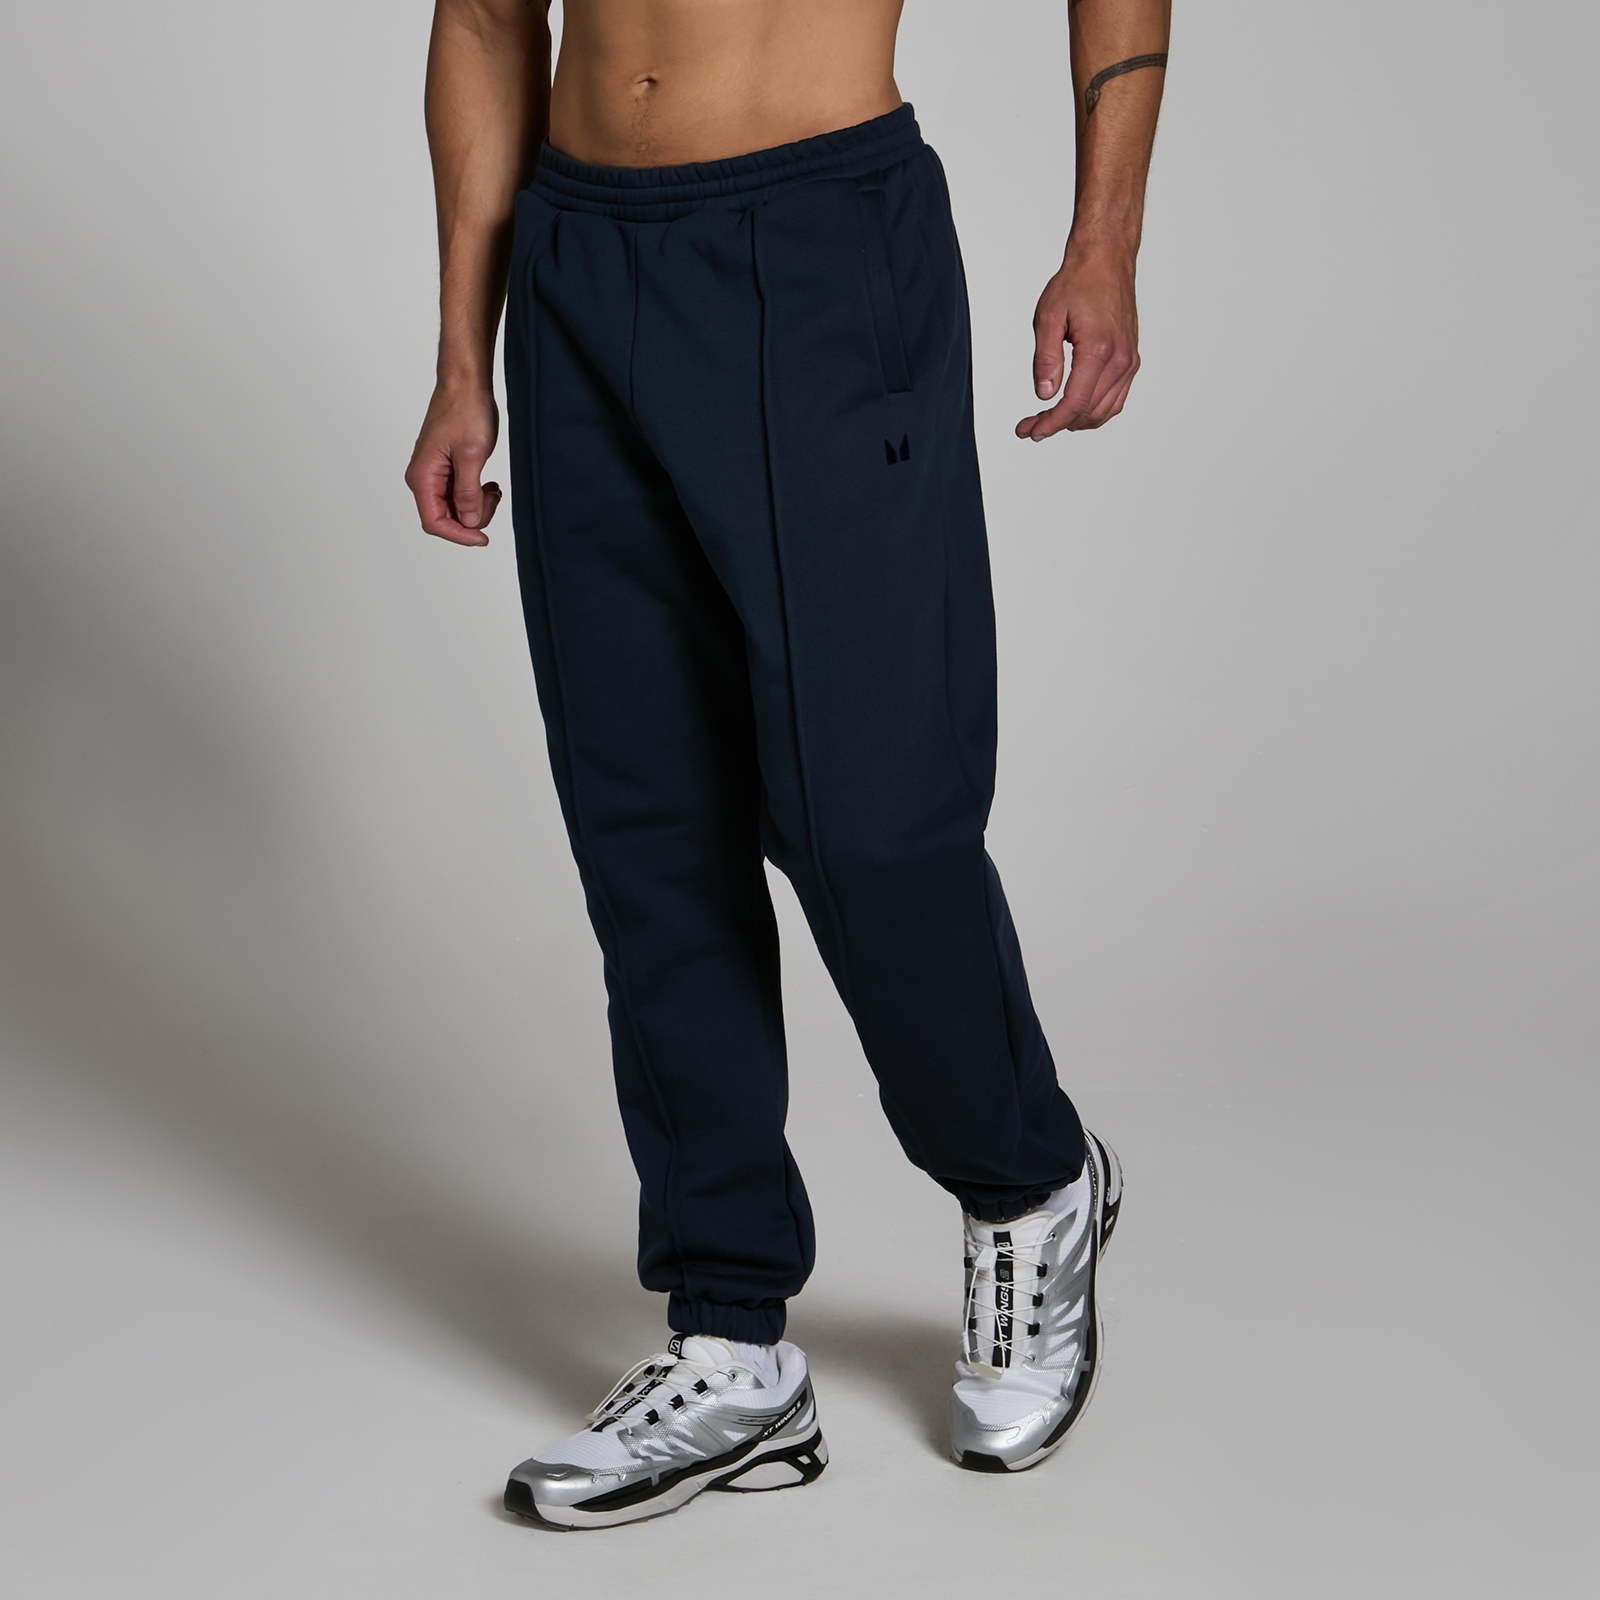 Image of Pantaloni da jogging pesanti oversize MP Lifestyle da uomo - Blu navy scuro - L